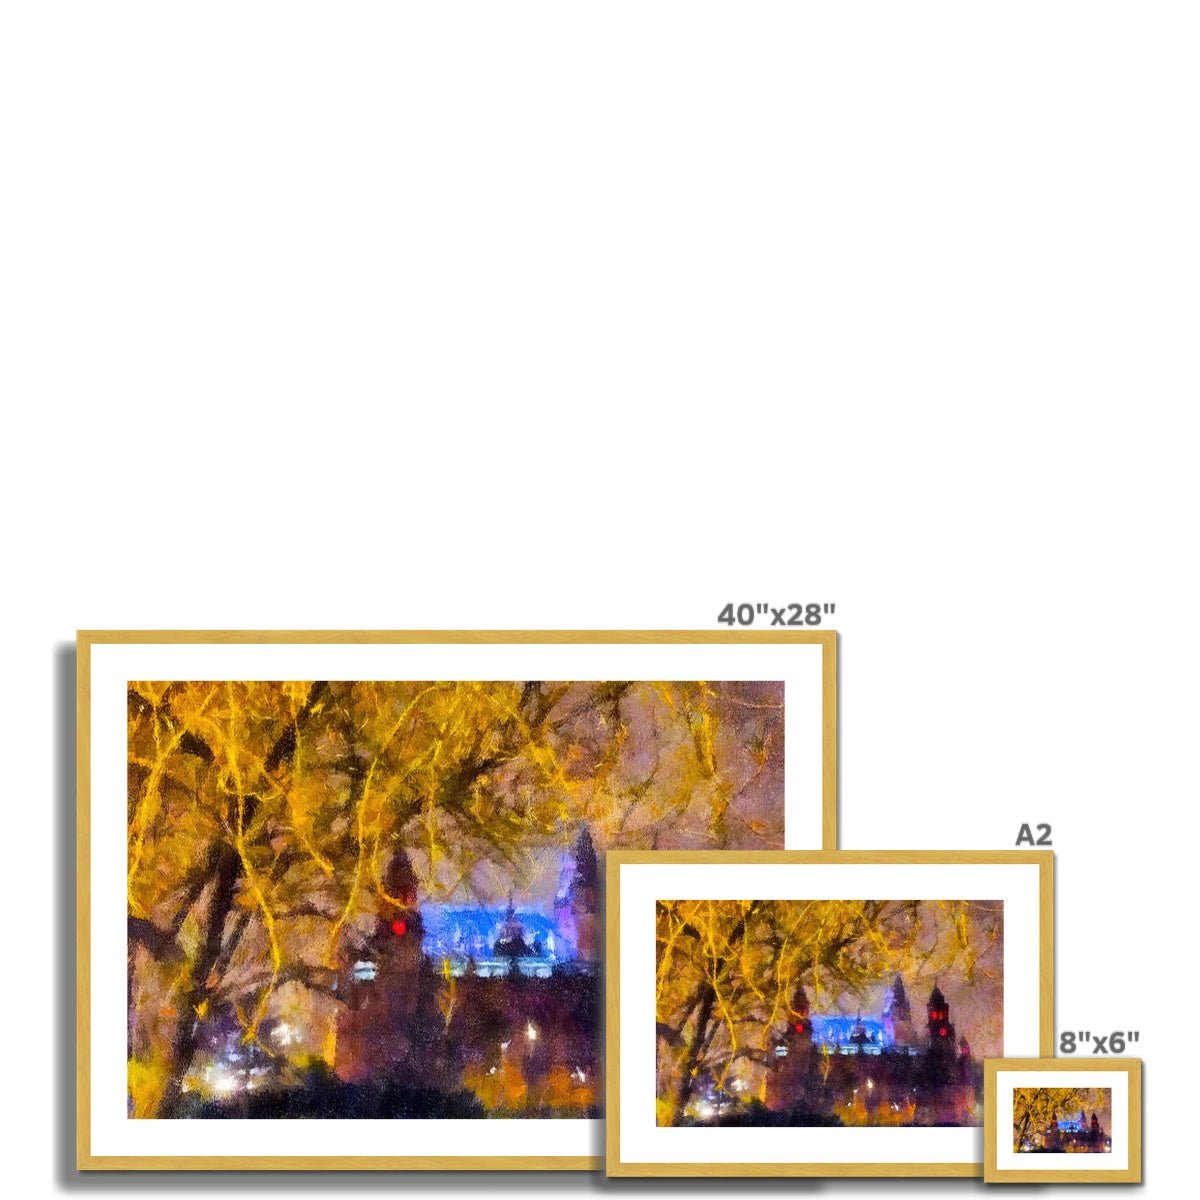 Kelvingrove Nights Painting | Antique Framed & Mounted Prints From Scotland-Antique Framed & Mounted Prints-Edinburgh & Glasgow Art Gallery-Paintings, Prints, Homeware, Art Gifts From Scotland By Scottish Artist Kevin Hunter